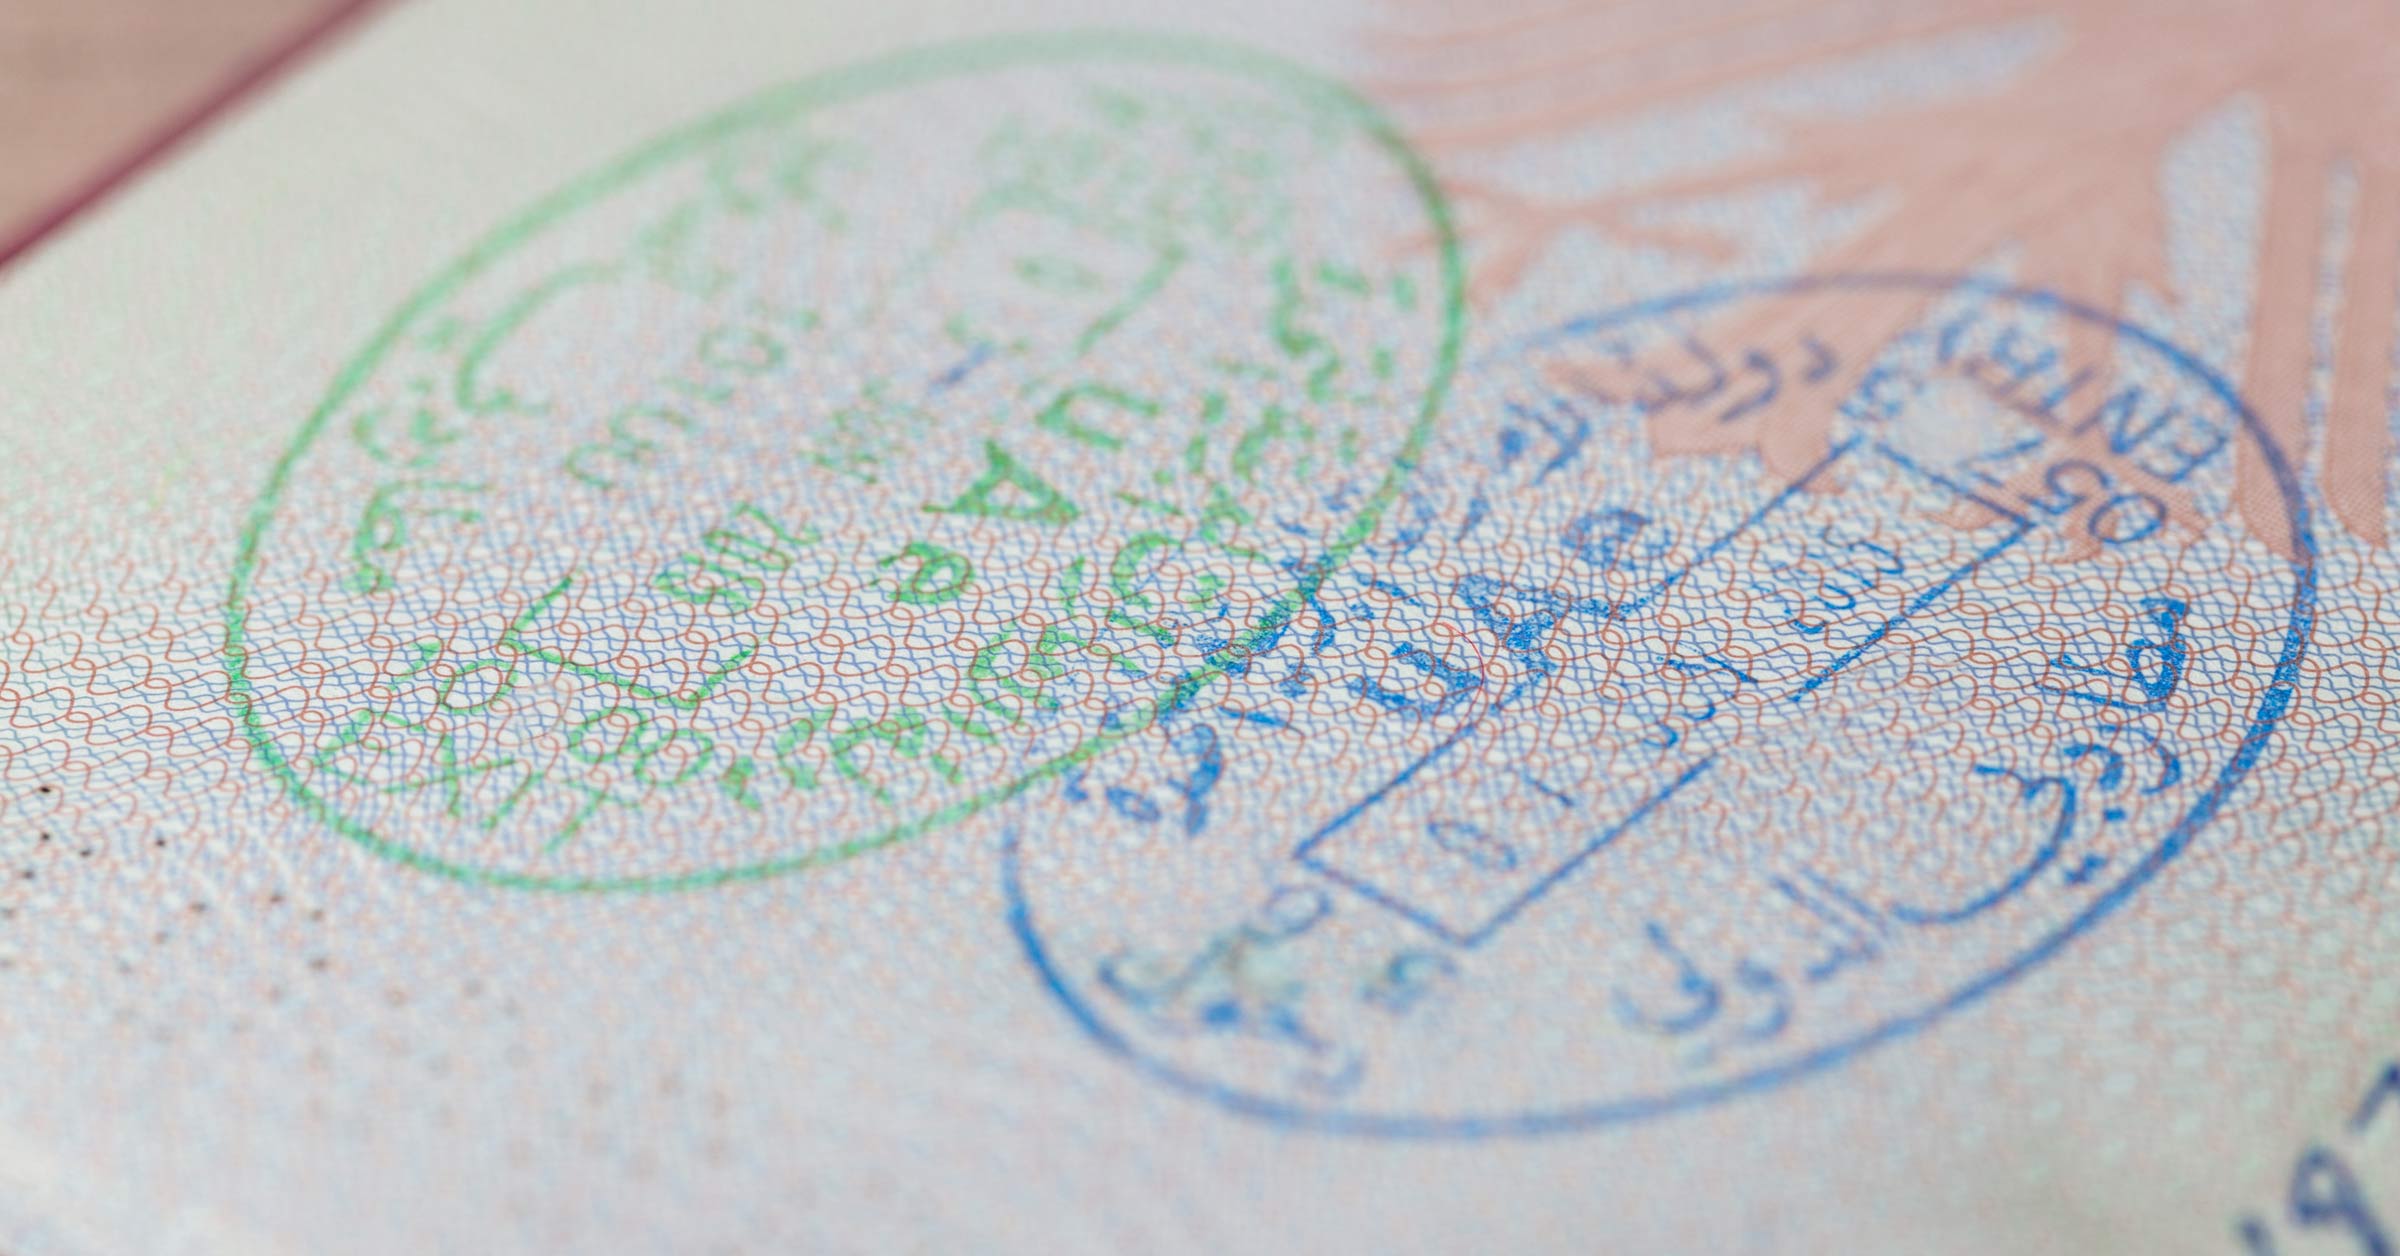 UAE suspends visa issuance to 13 countries including Algeria, Libya, Tunisia